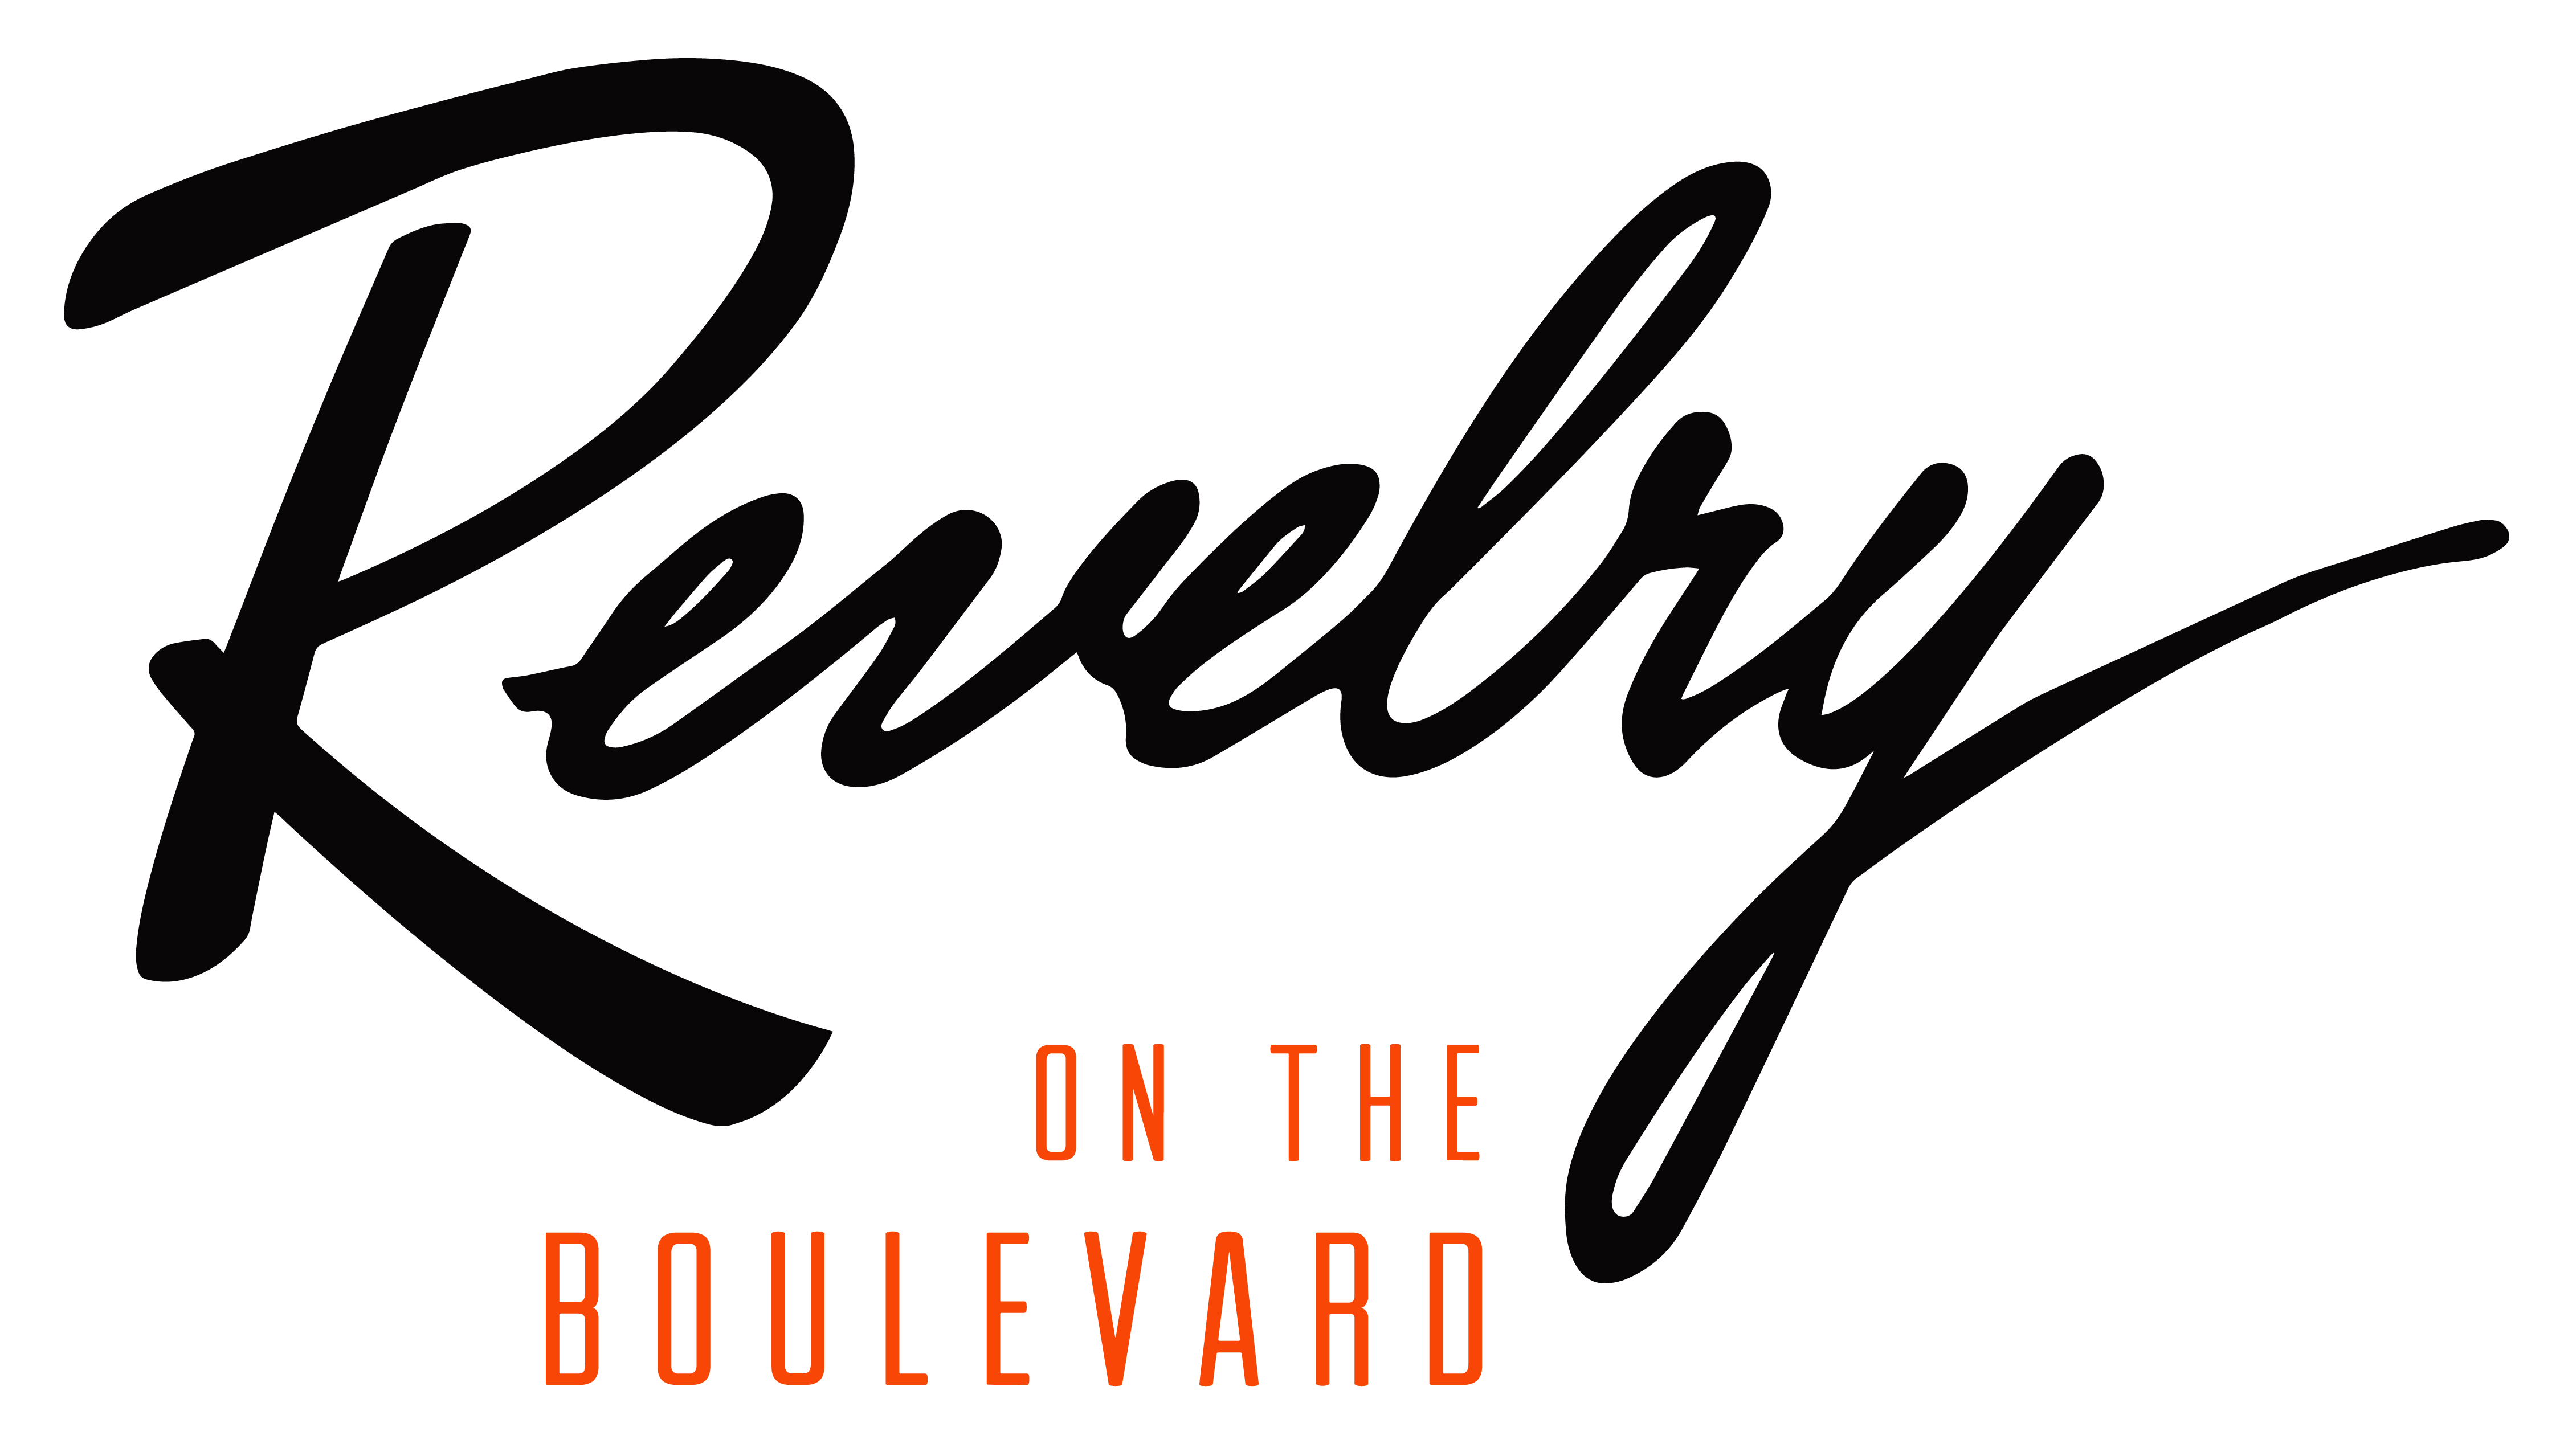 Blvd Logo - Revelry Boulevard